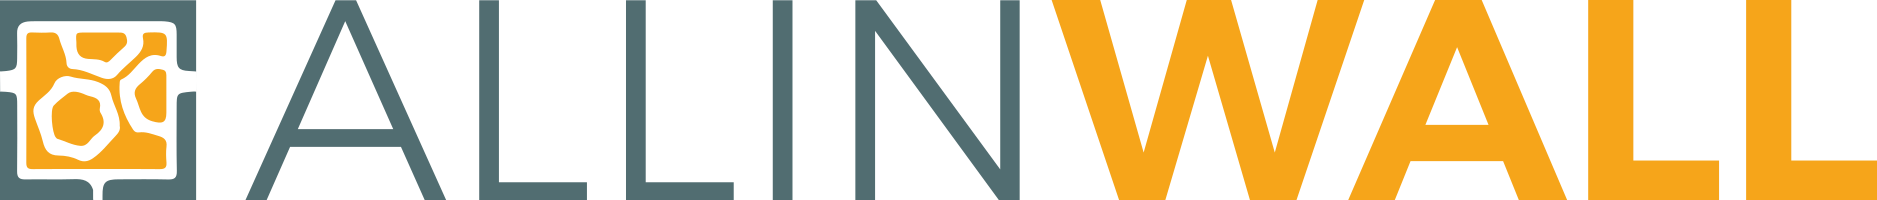 allinwall logo line dark